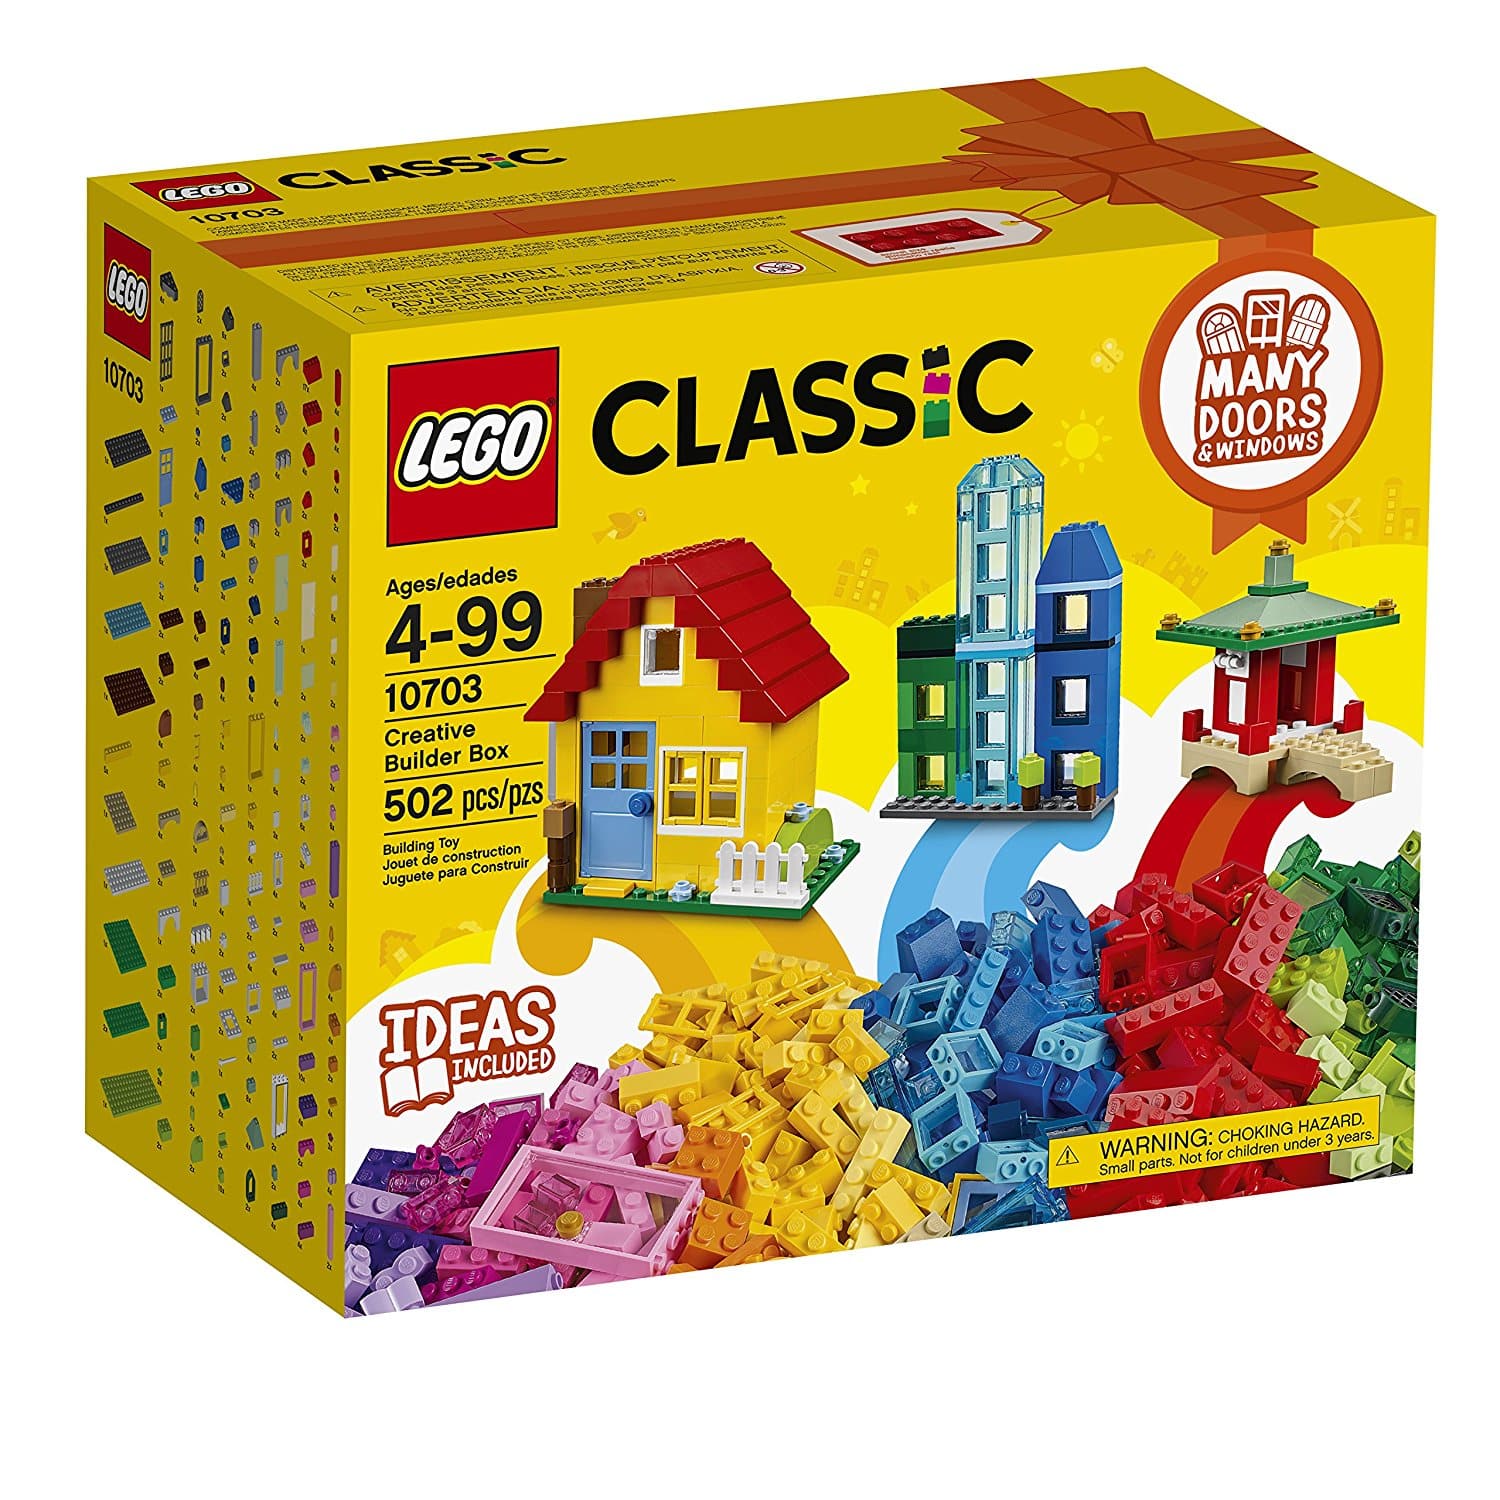 LIGHTNING DEAL ALERT! LEGO Classic Creative Builder Box 10703 – 30%